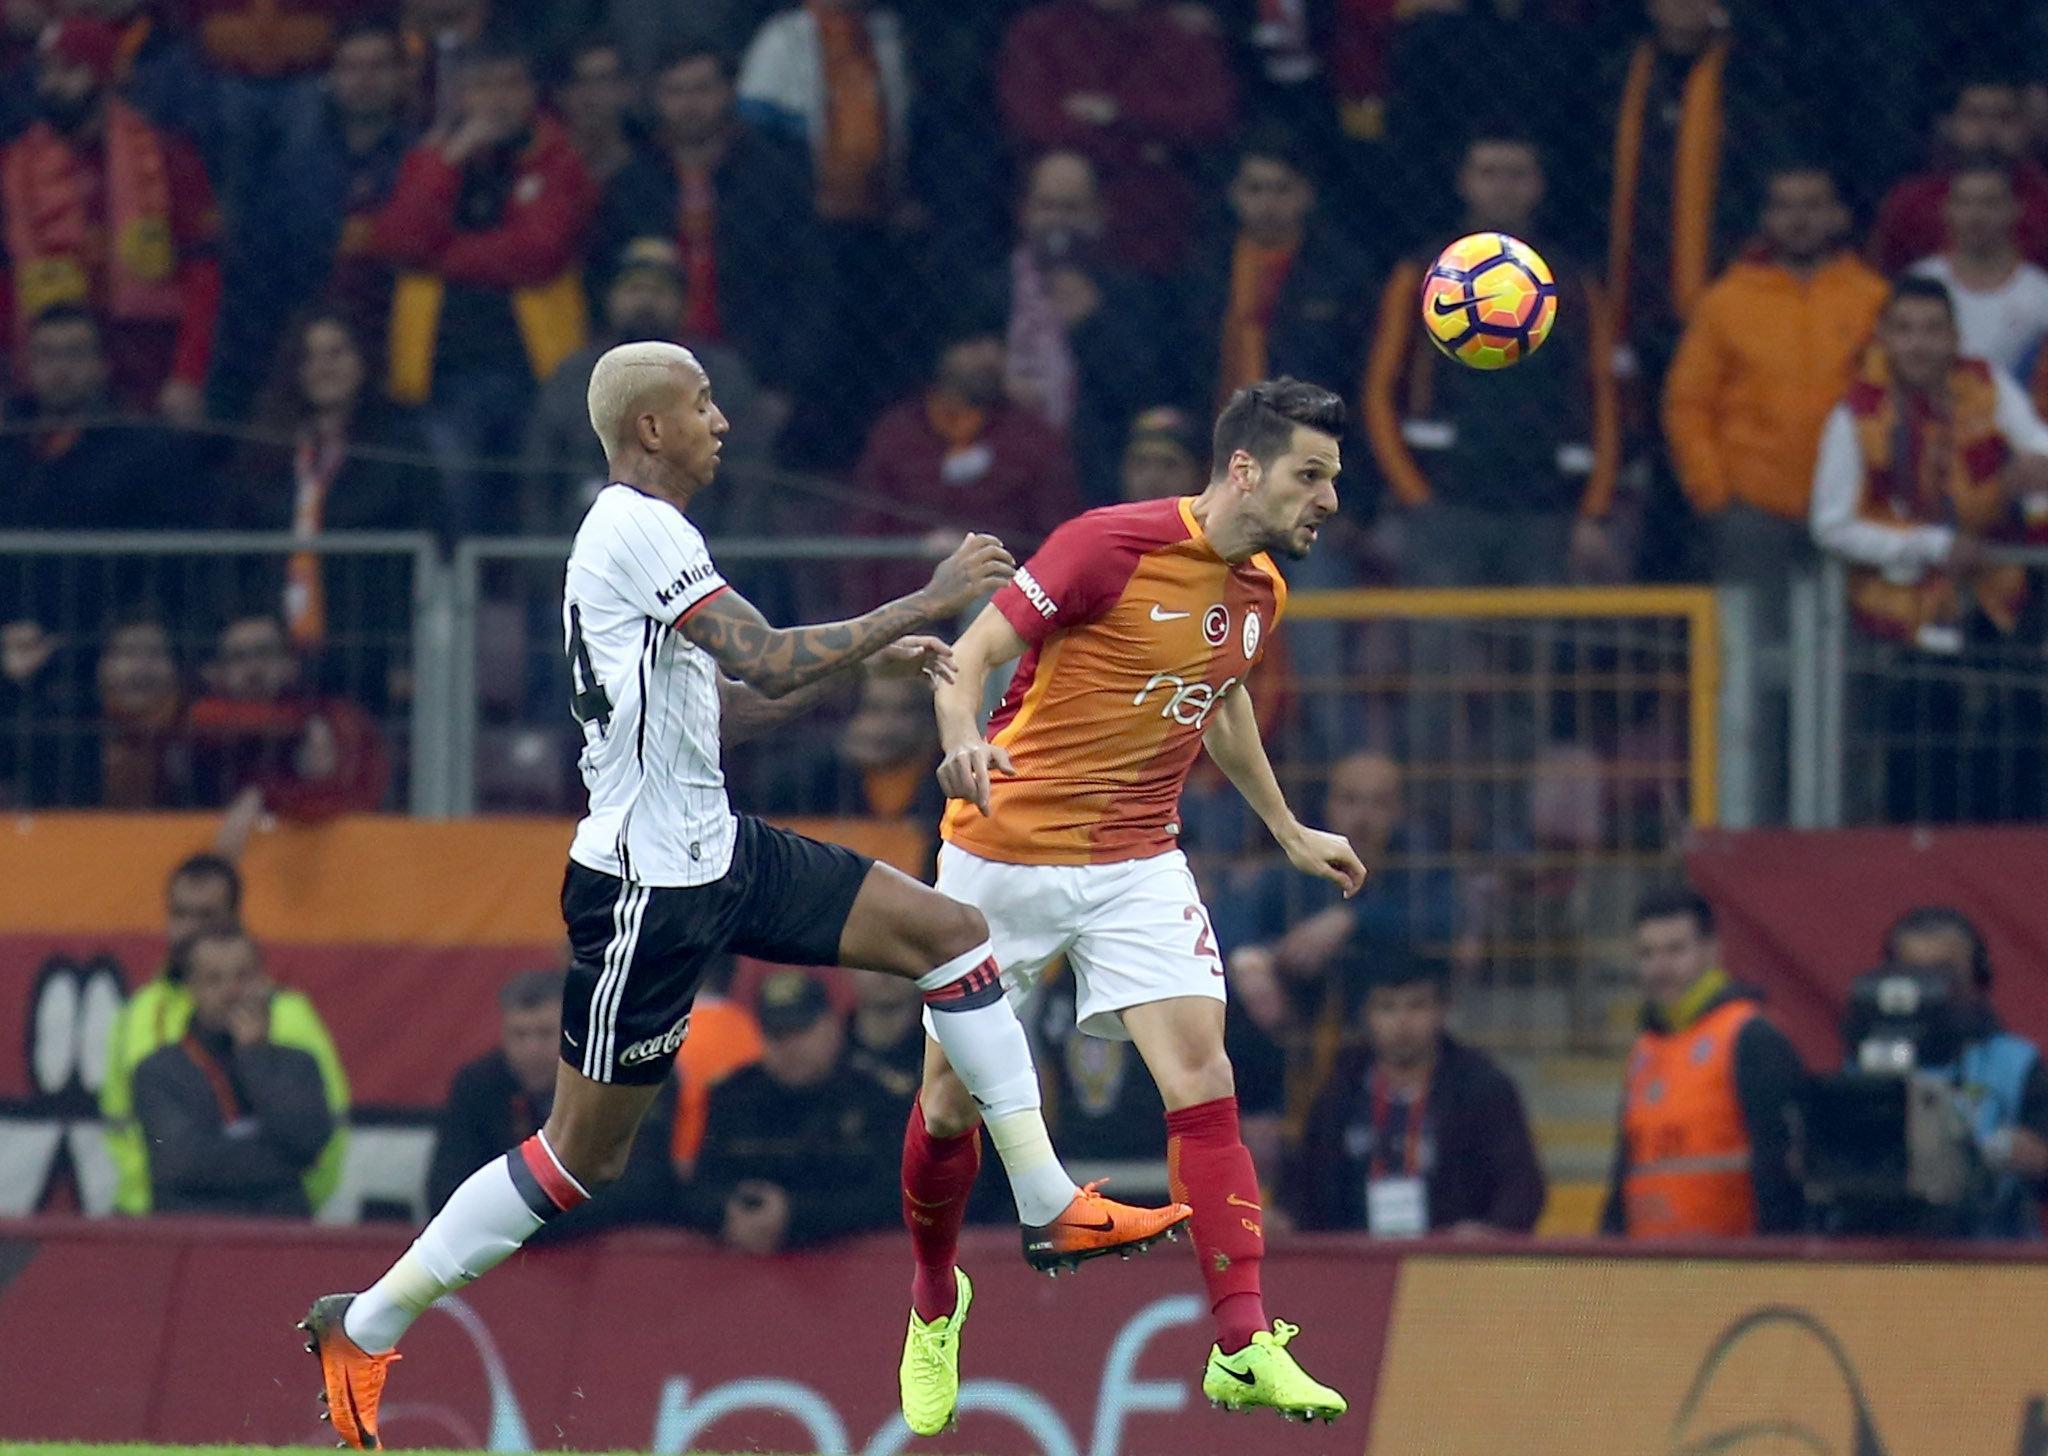 Galatasaray 0 - 1 Beşiktaş (Gs - Bjk Maç sonucu)